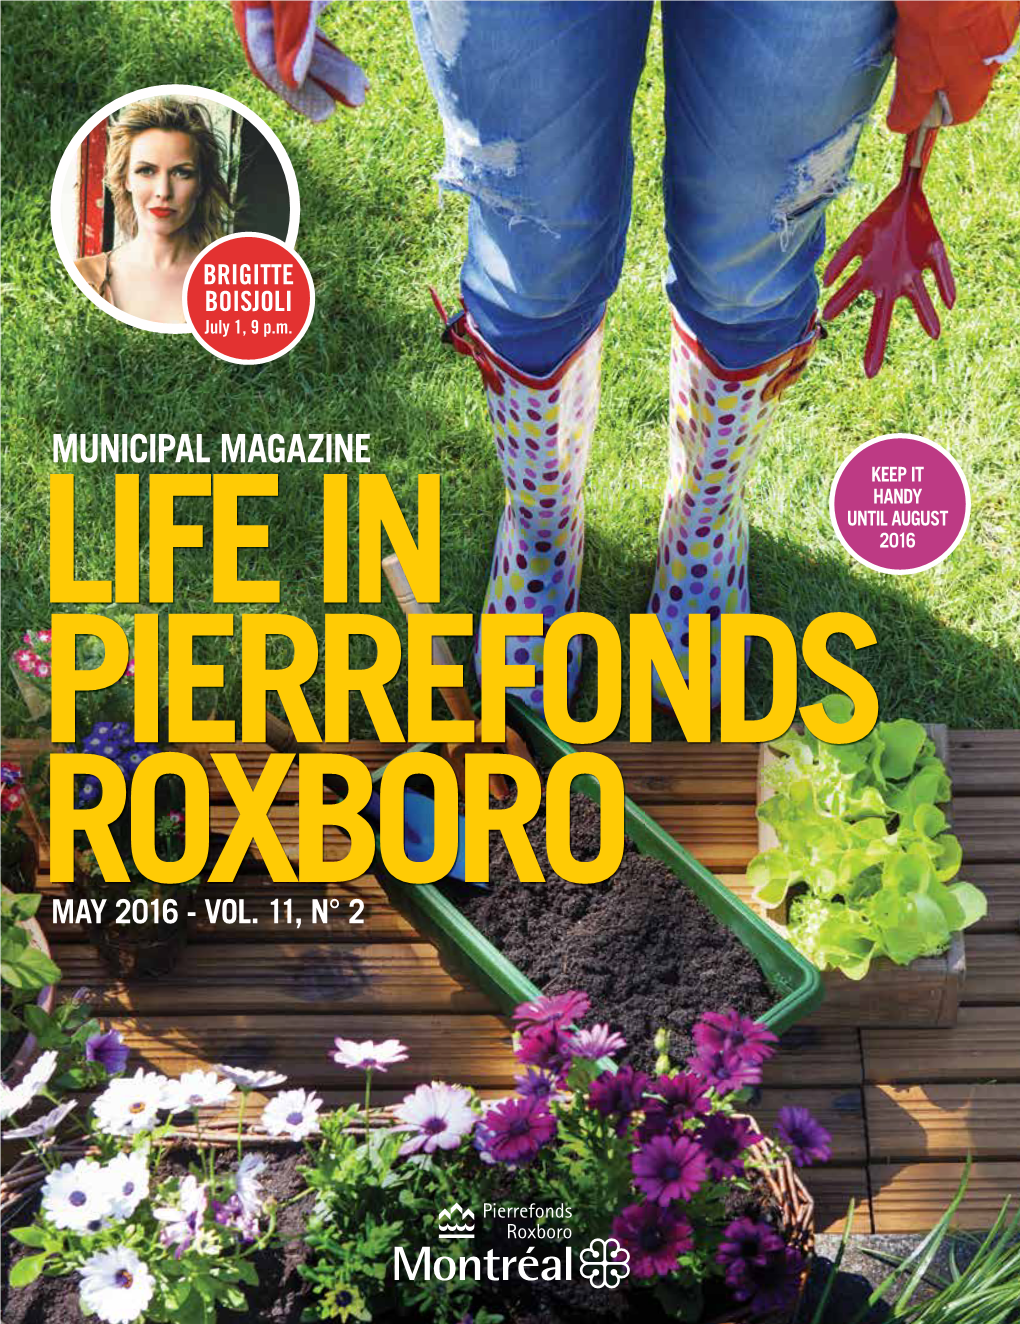 Municipal Magazine Keep It Handy Until August Life in 2016 Pierrefonds Roxboro May 2016 - Vol